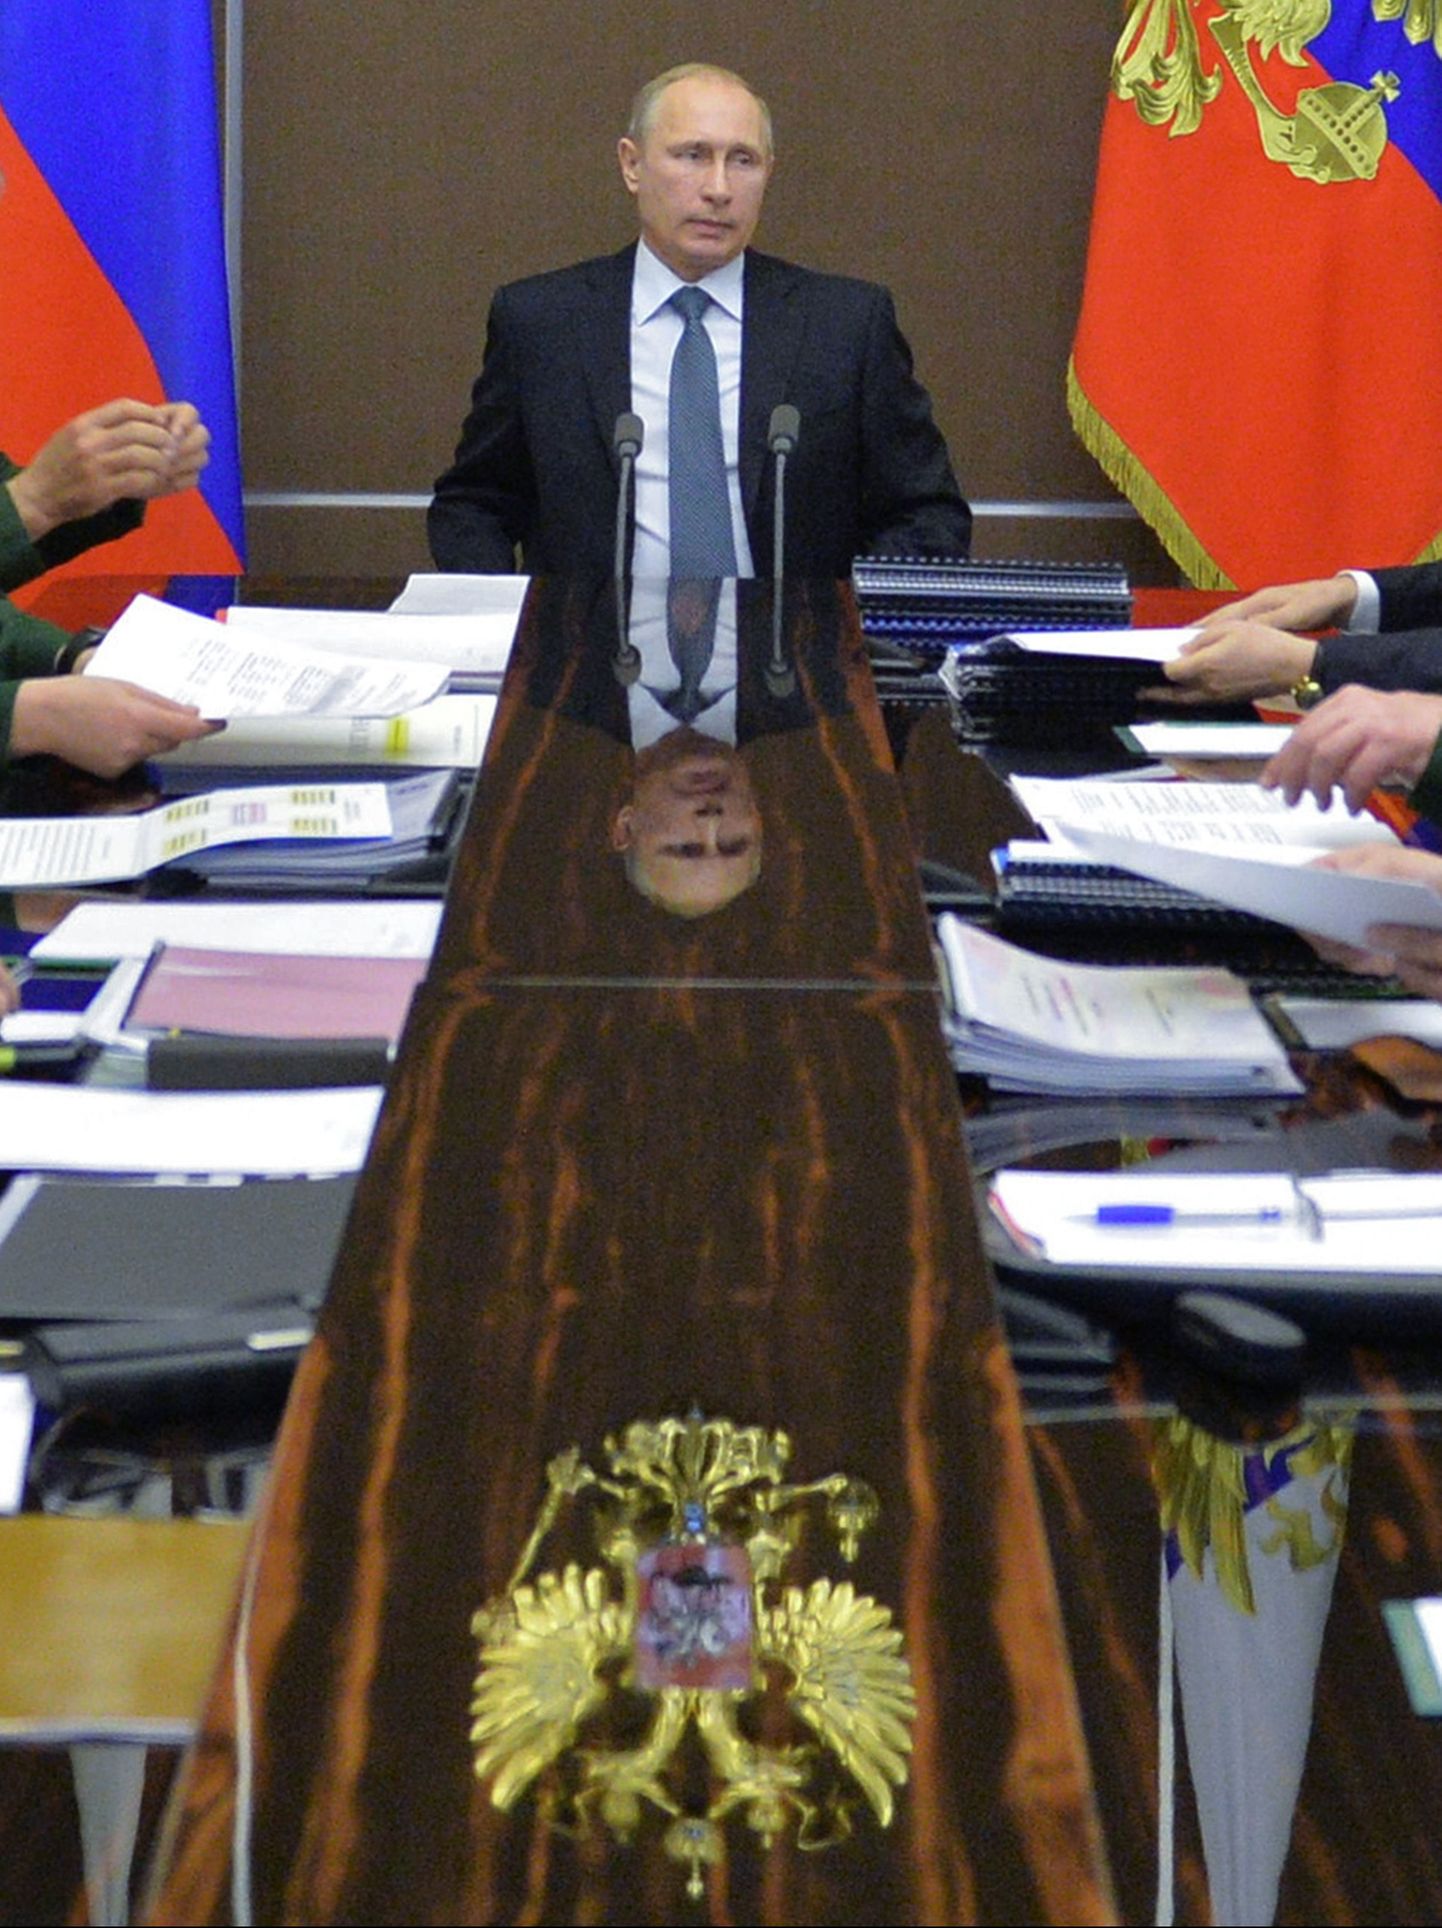 Vene president Vladimir Putin Botšarov Rutšei residentsis Sotšis.